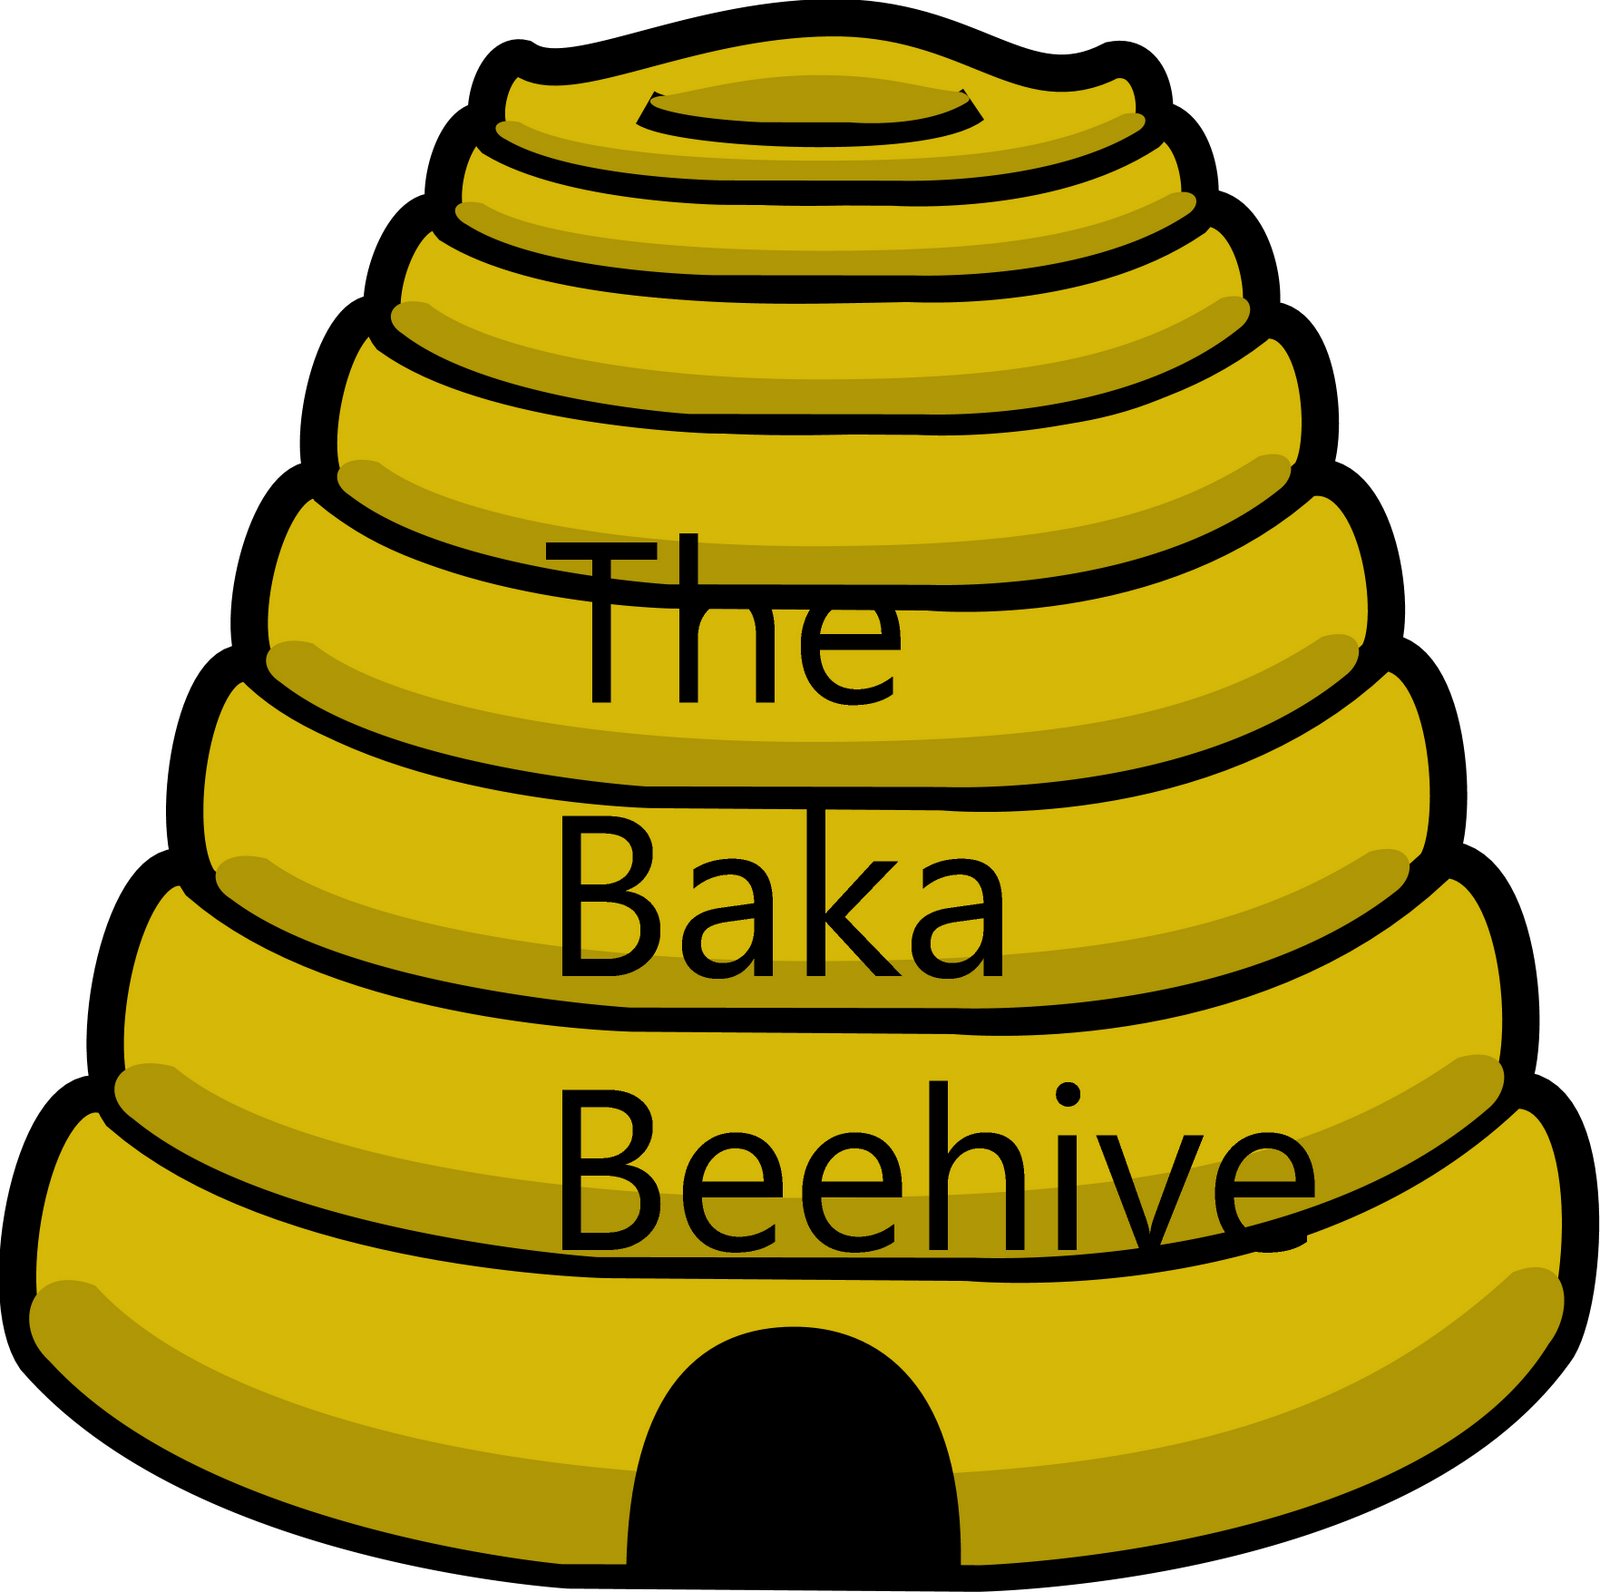 The Baka Hive